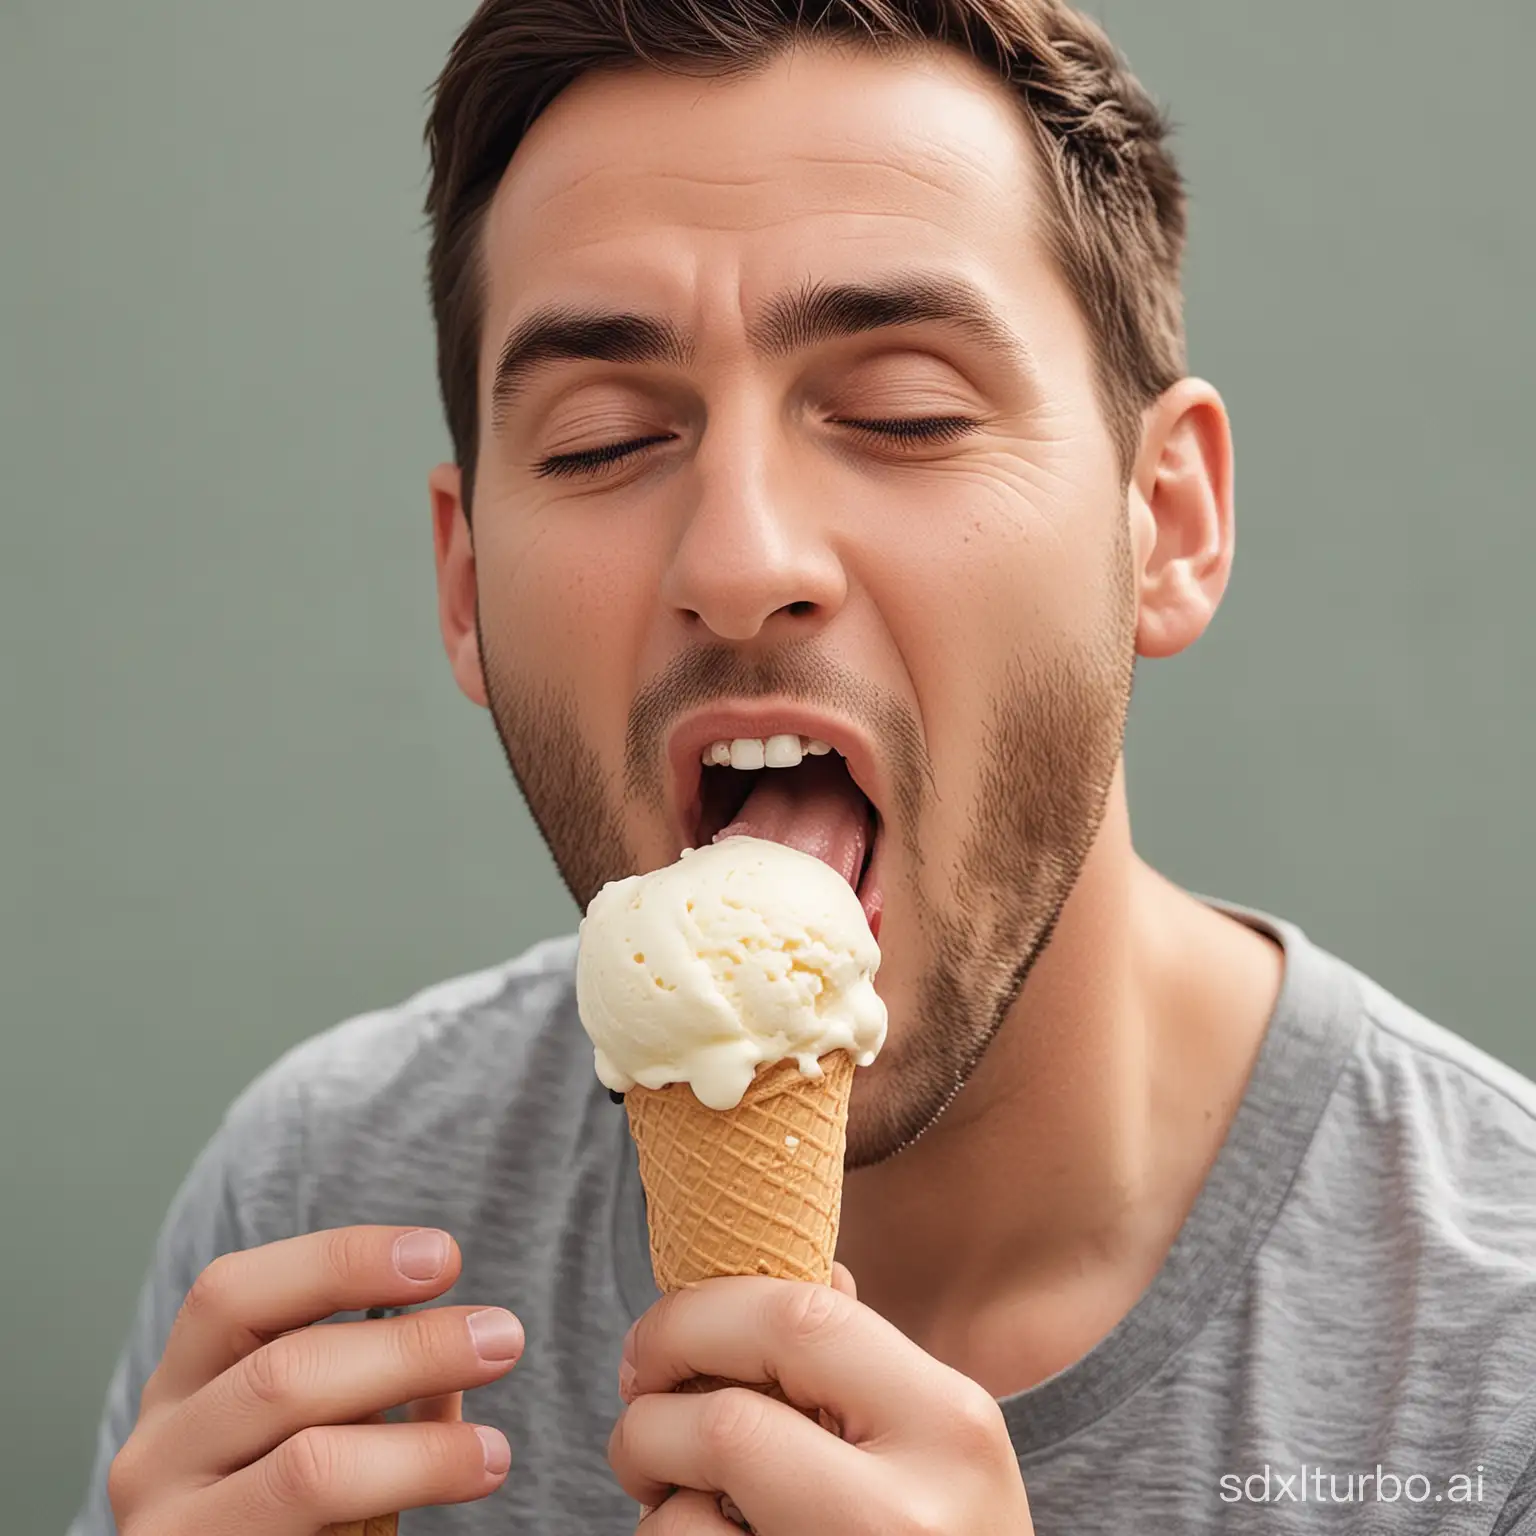 a man licking ice cream